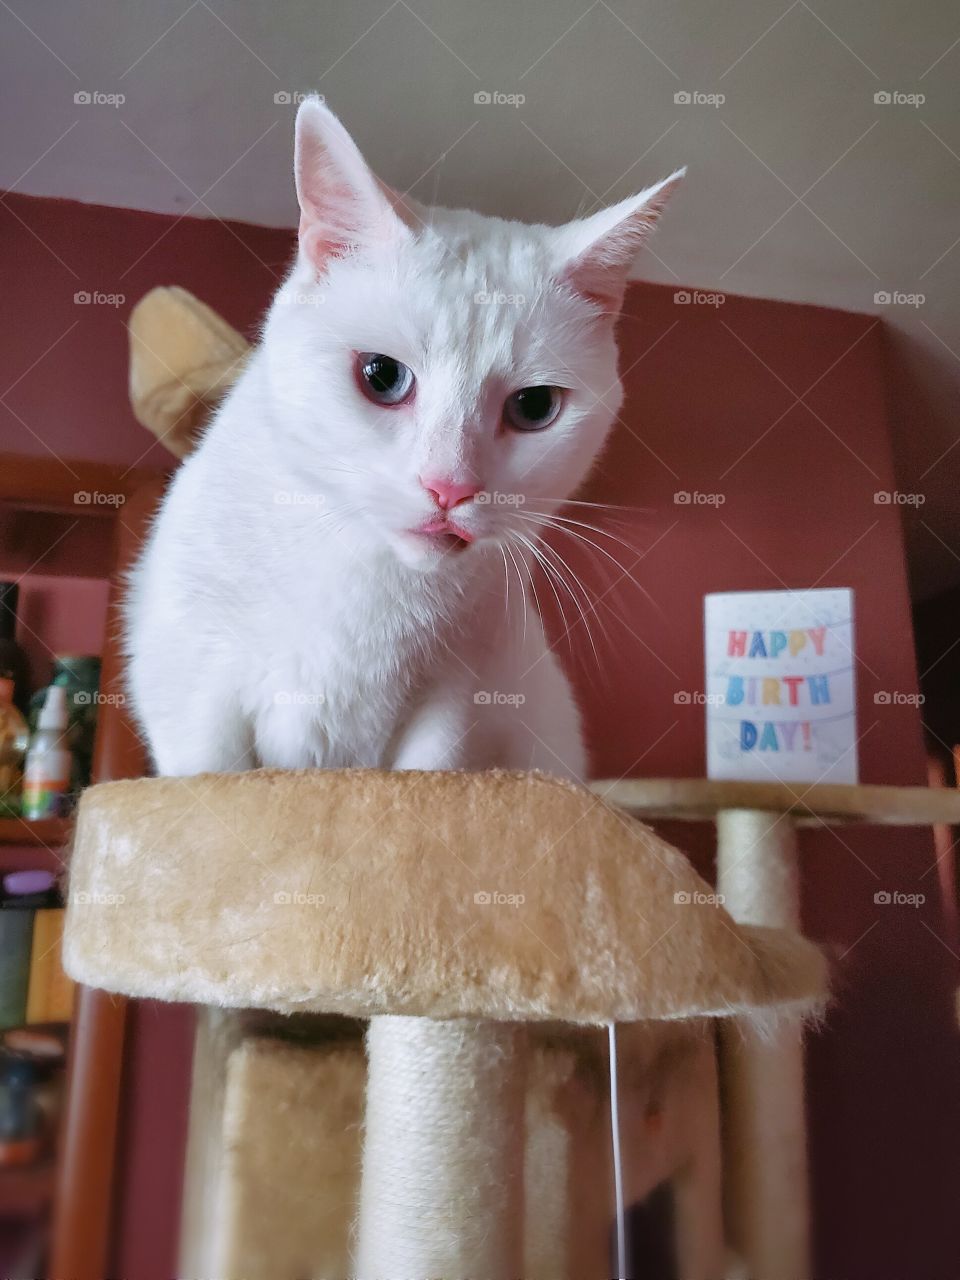 Birthday Cat!